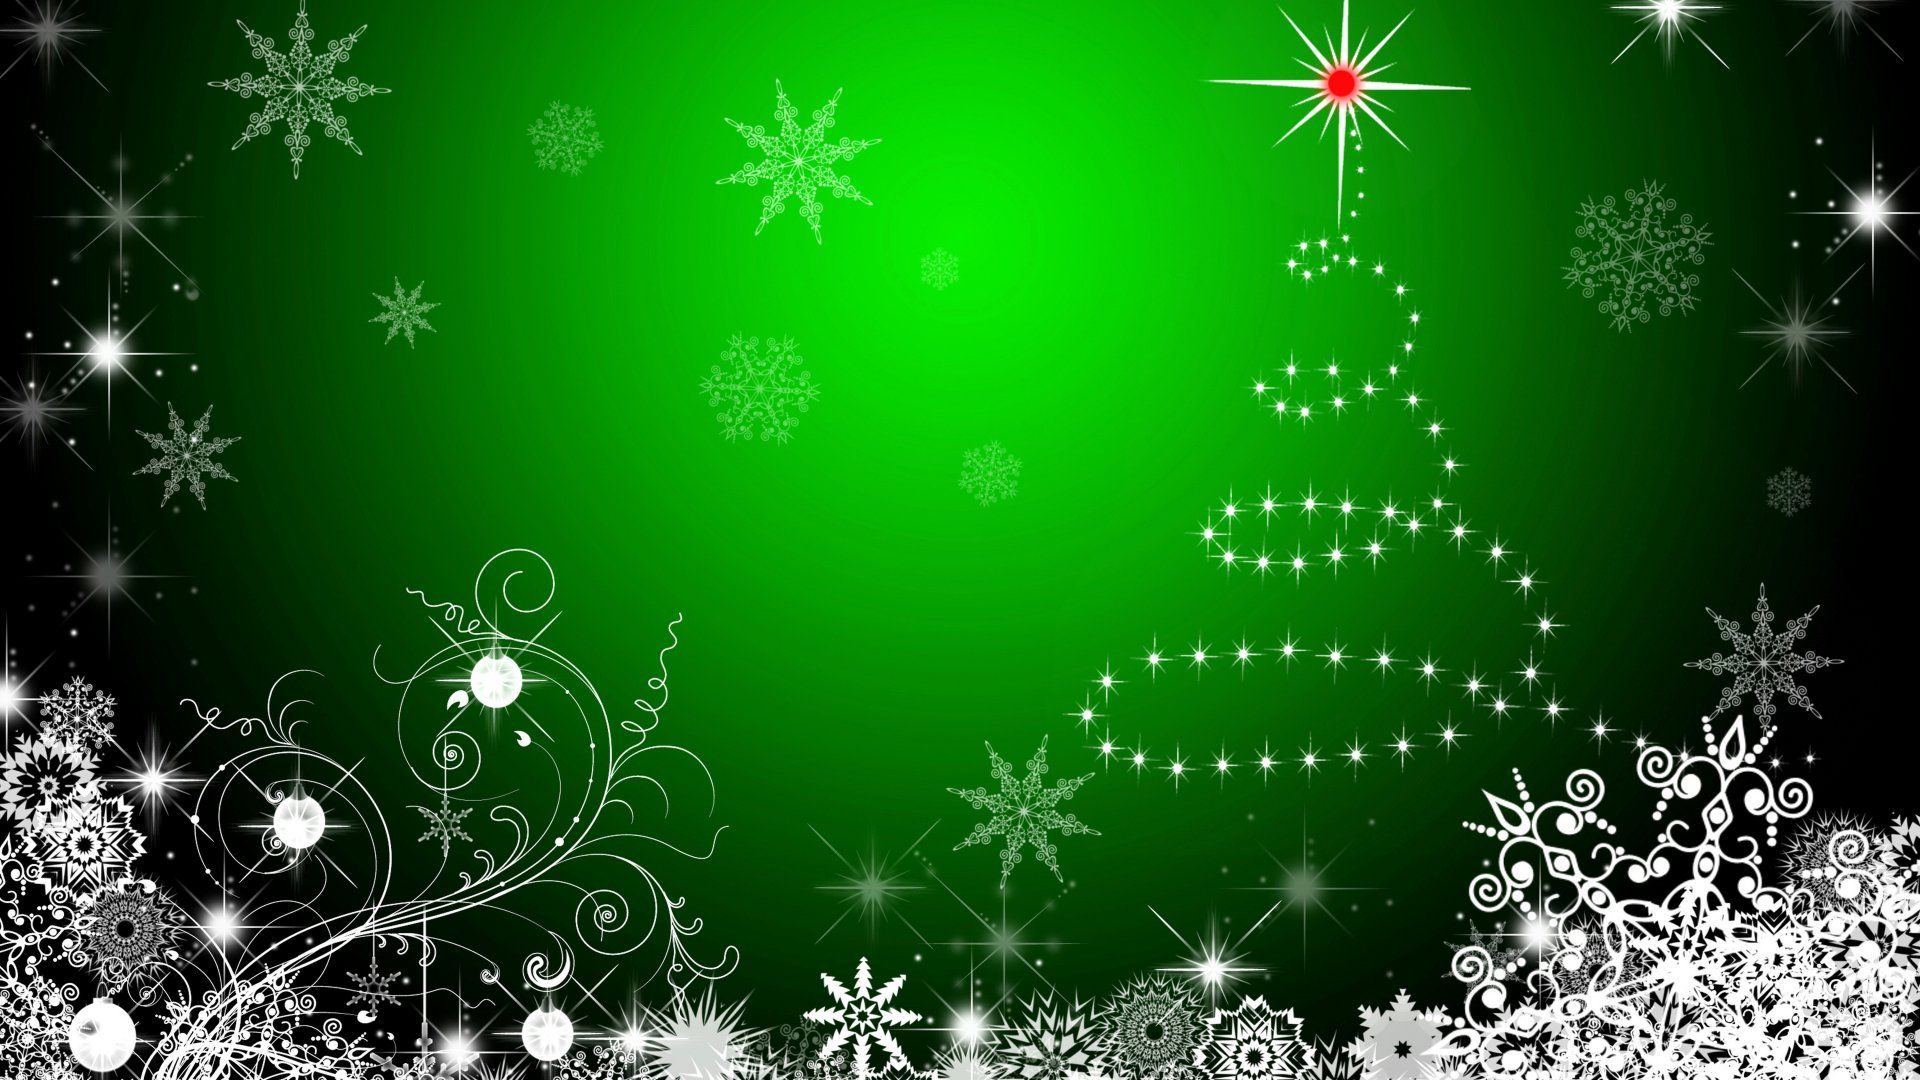 Green Christmas background wallpaper